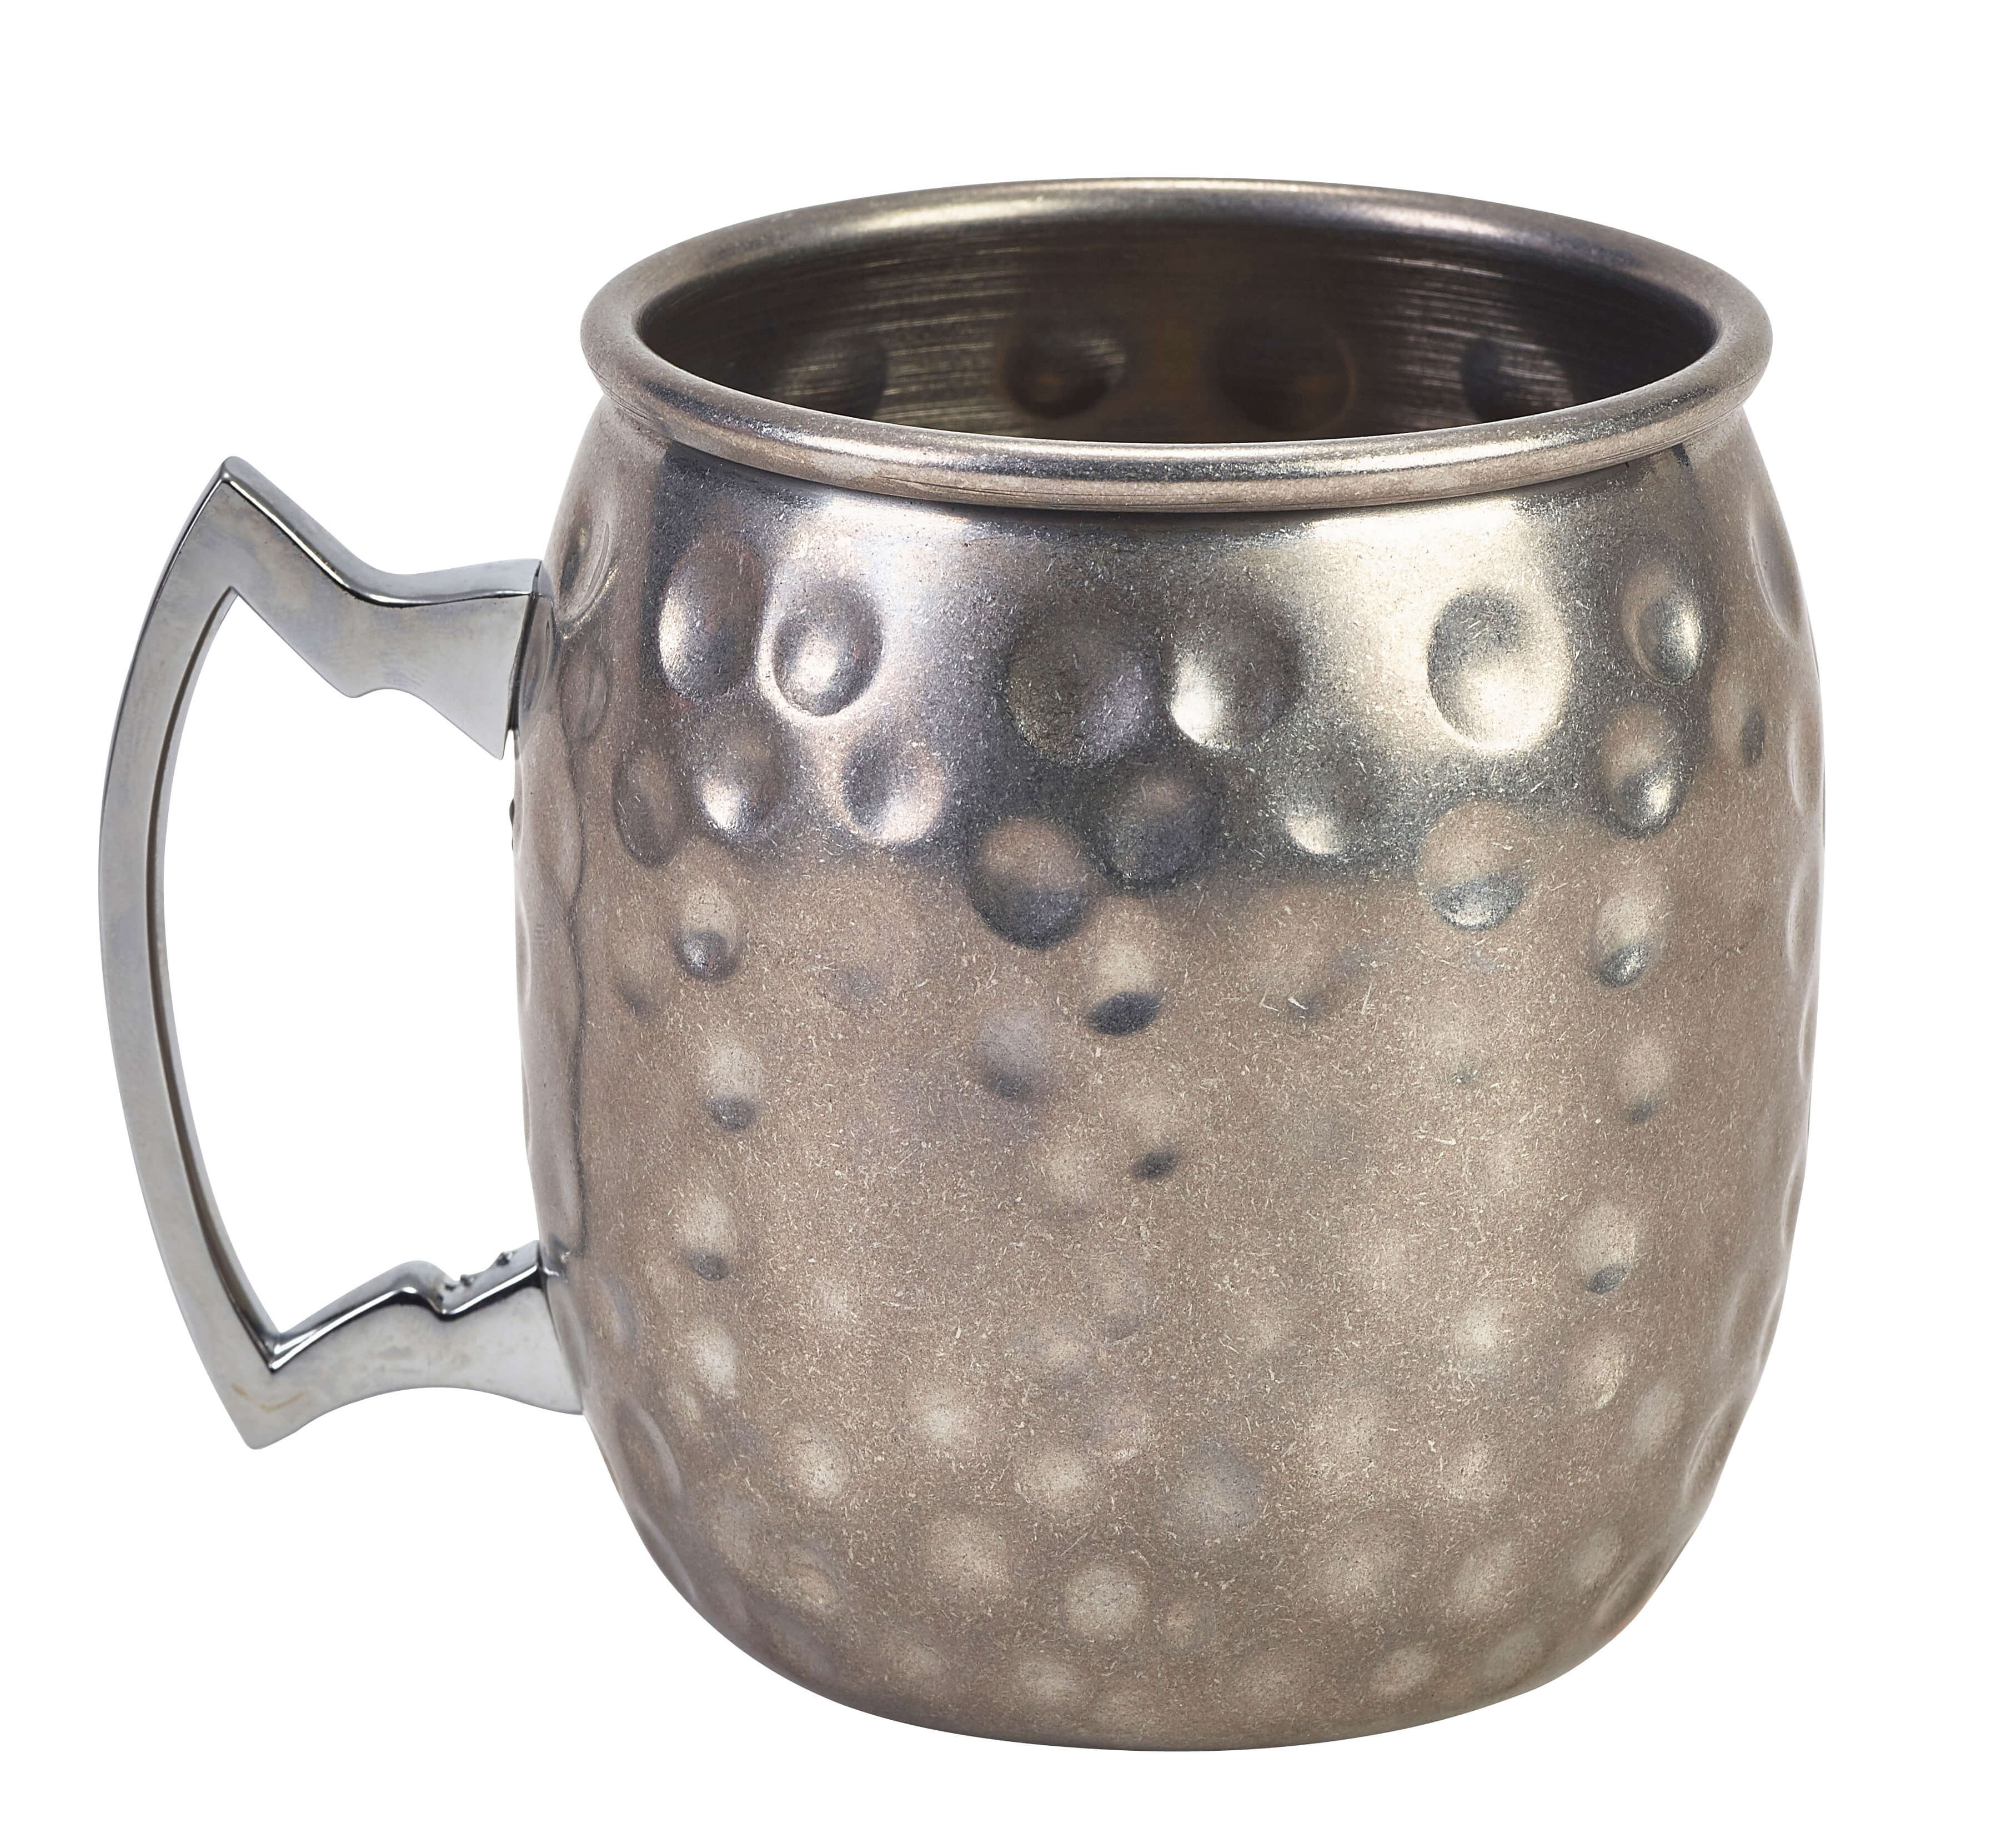 Moscow Mule mug, vintage stainless steel, hammered - 400ml